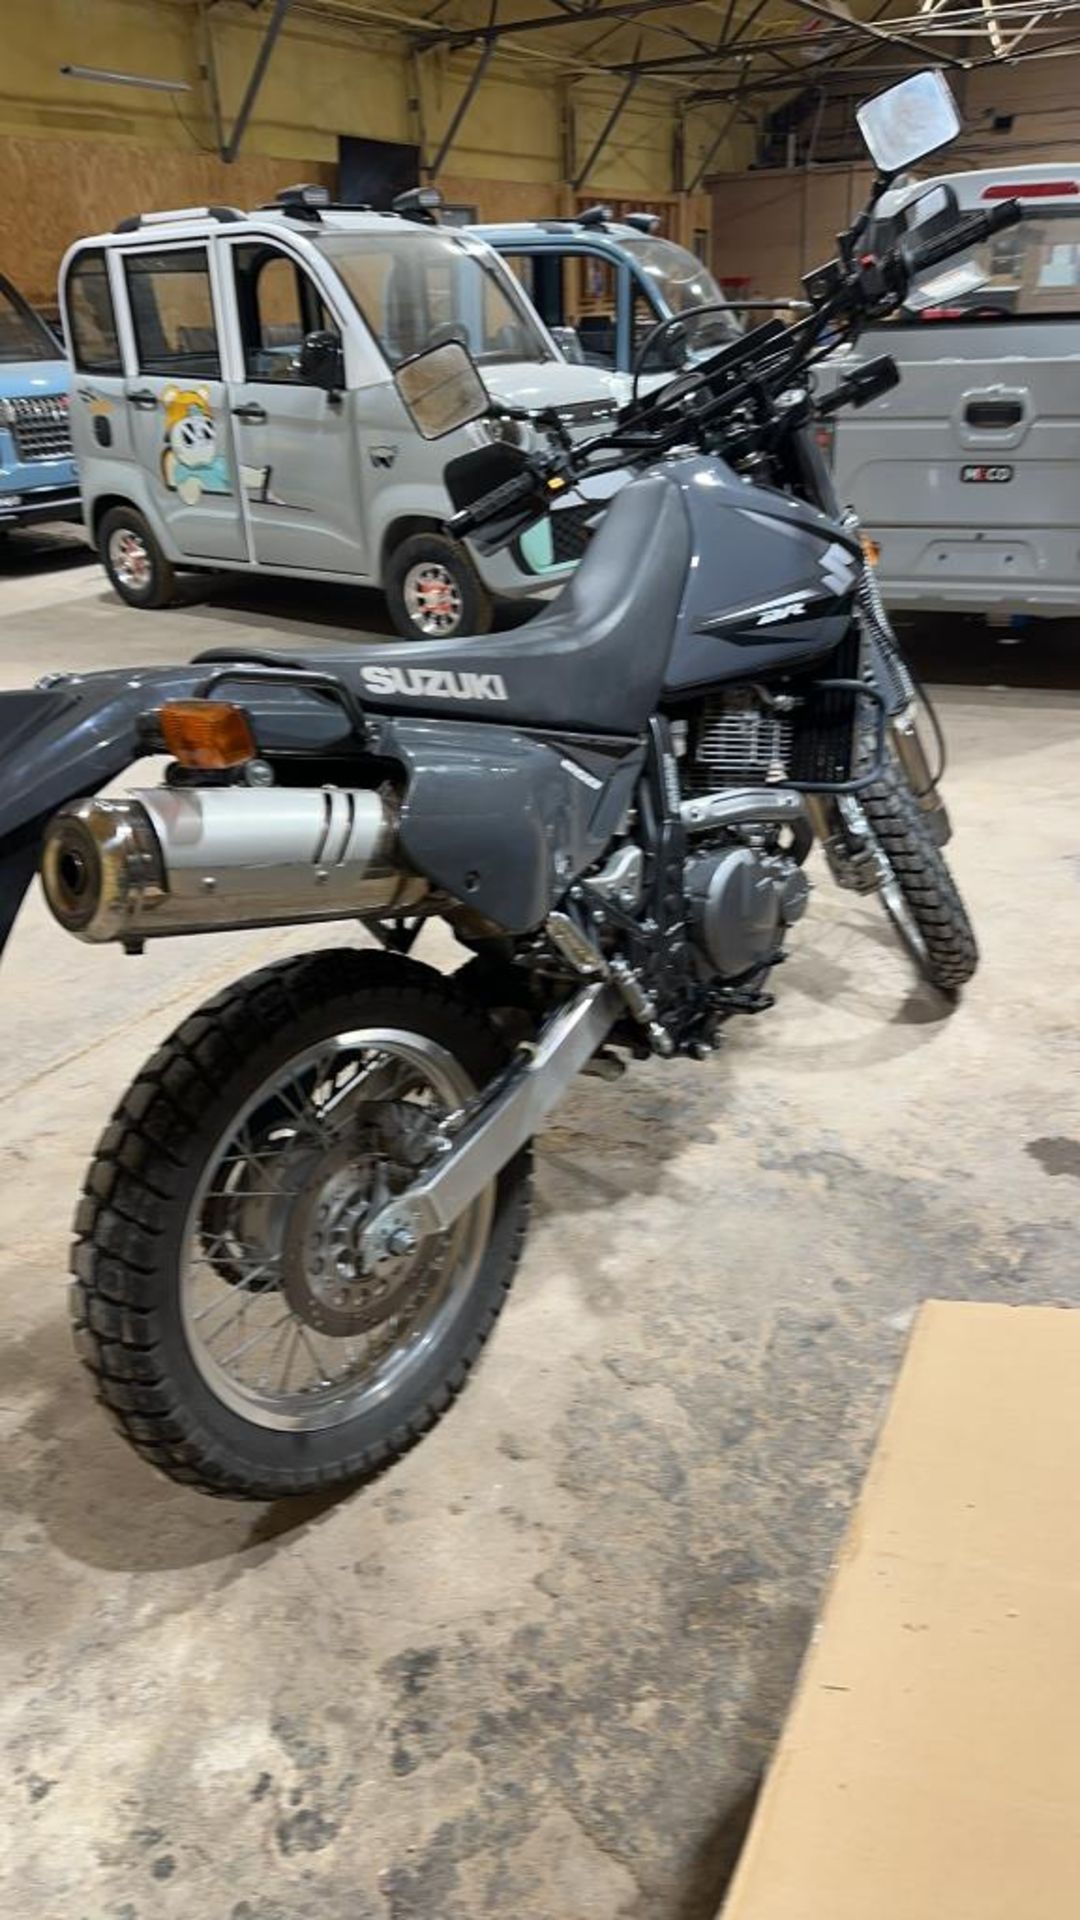 2012 Suzuki DR650S motorcycle - Image 14 of 36